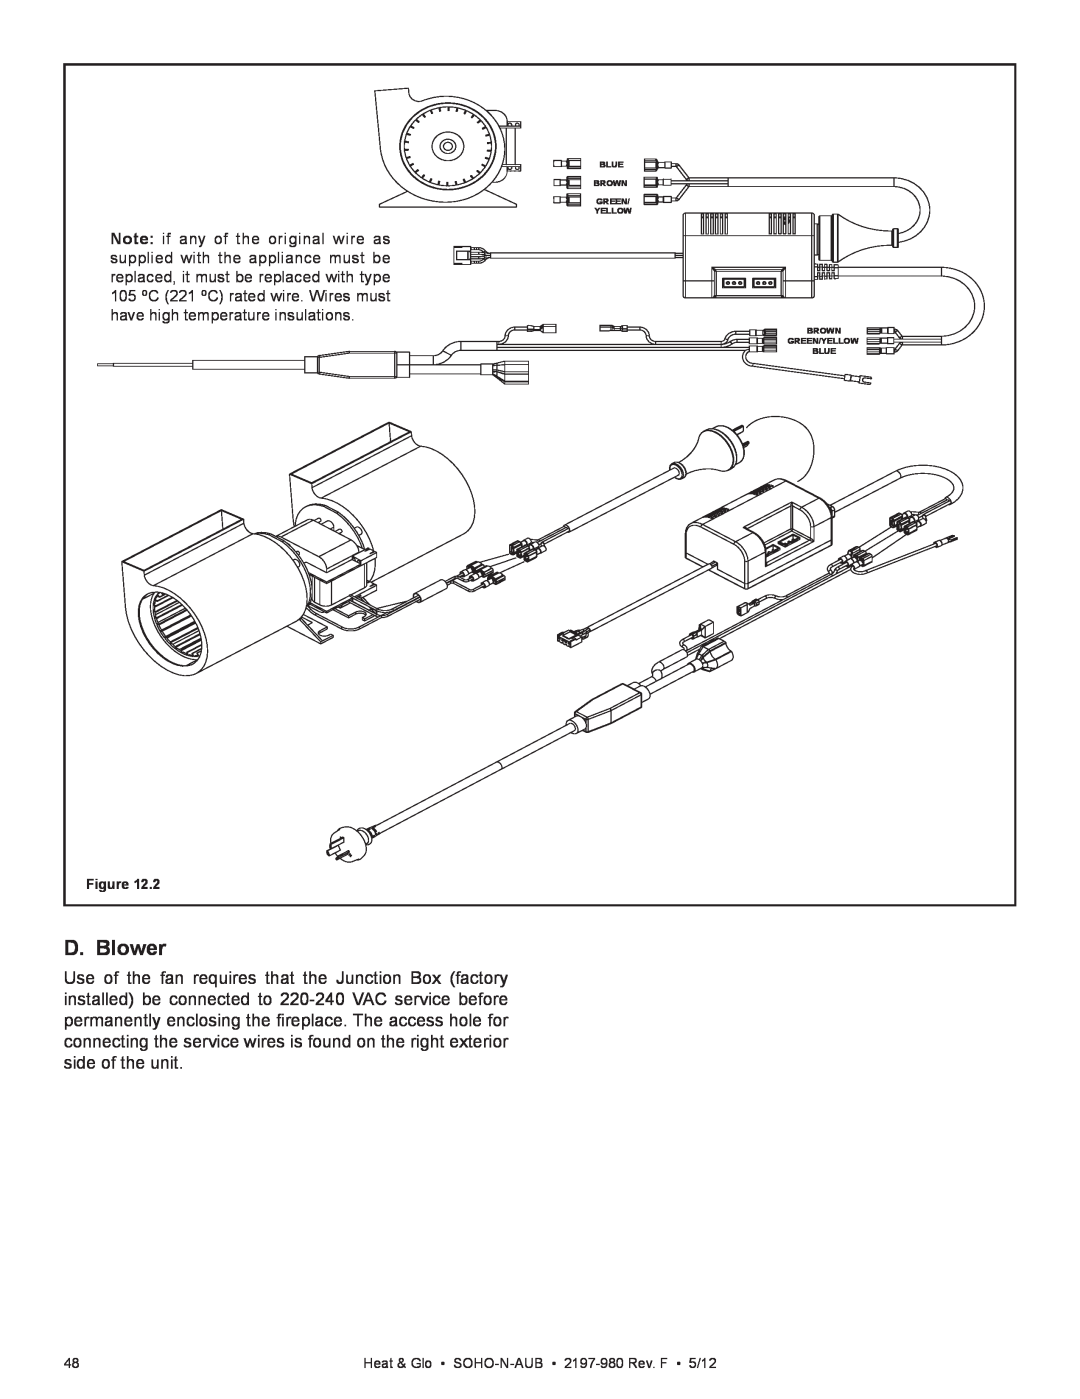 Heat & Glo LifeStyle owner manual D. Blower, Heat & Glo • SOHO-N-AUB• 2197-980Rev. F • 5/12 